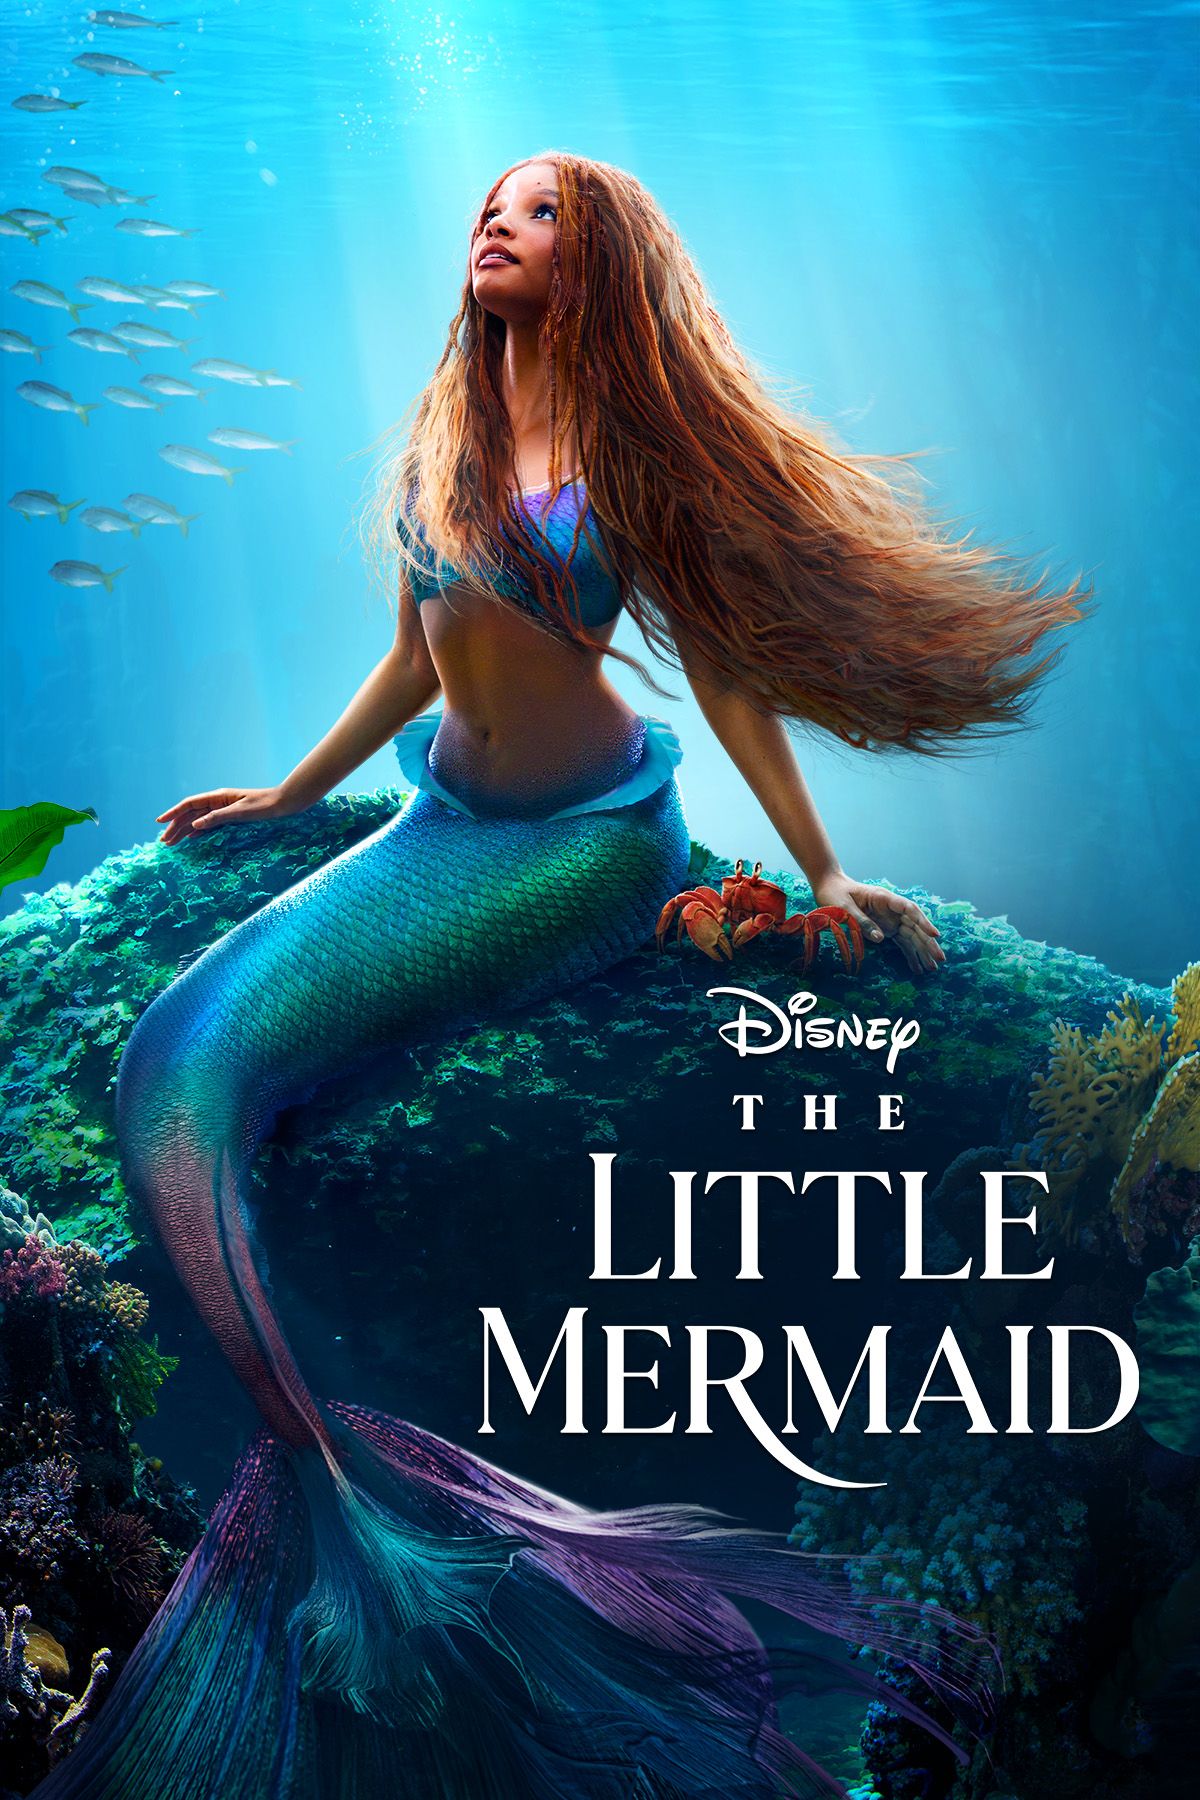 adele alvarez add the mermaid movie download photo